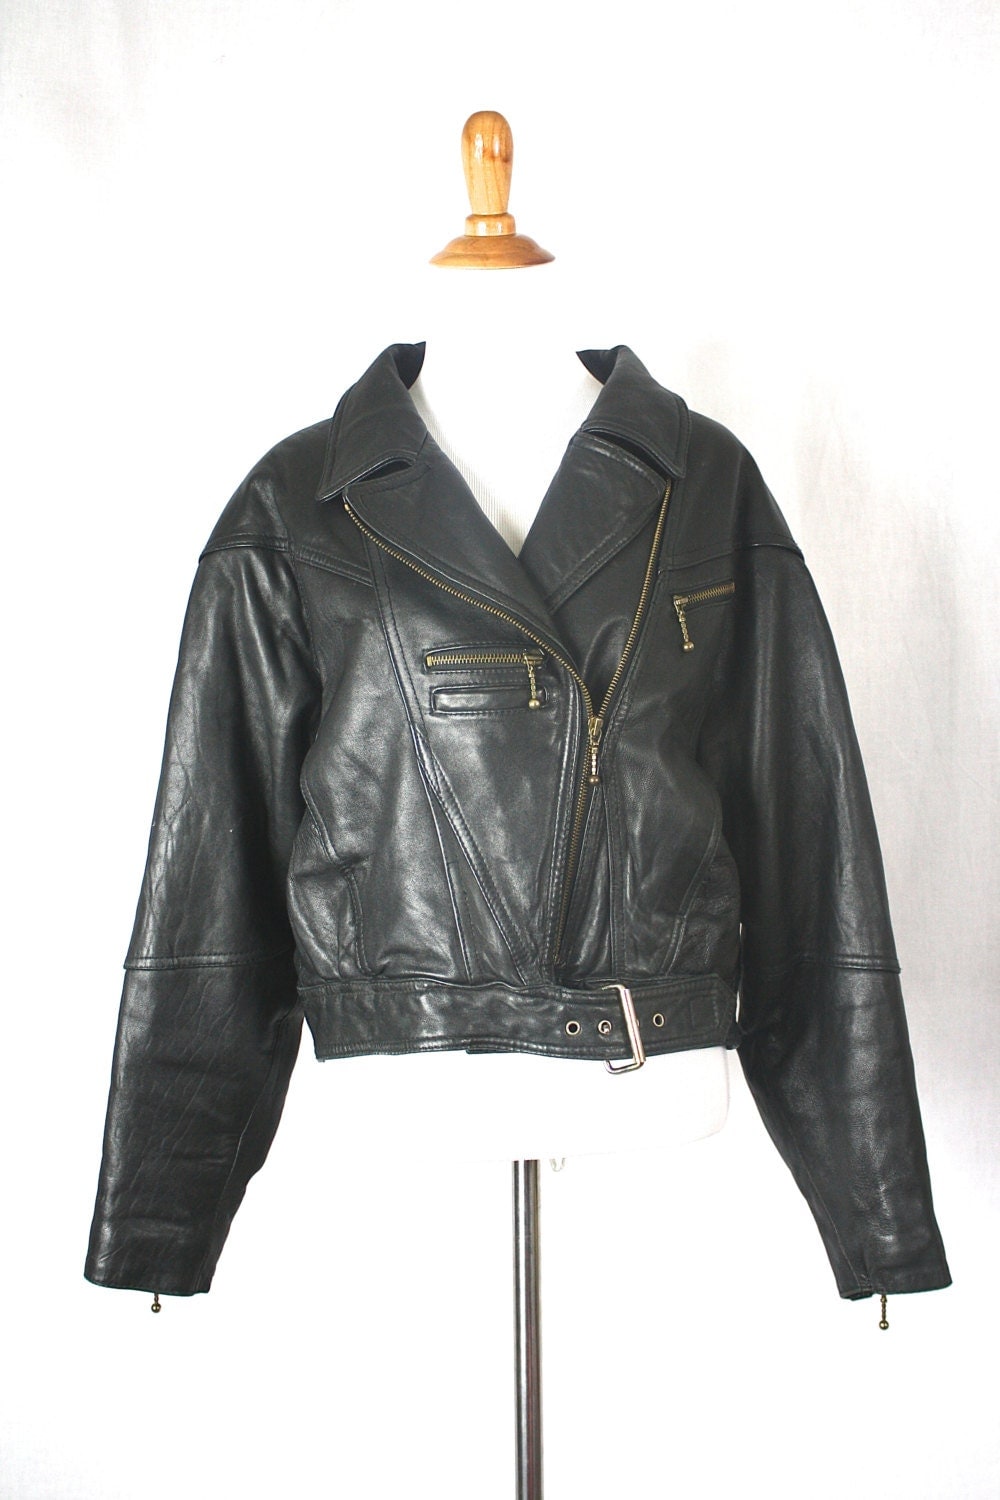 Women's 80s Black Leather Jacket by SpringFeverVintage on Etsy